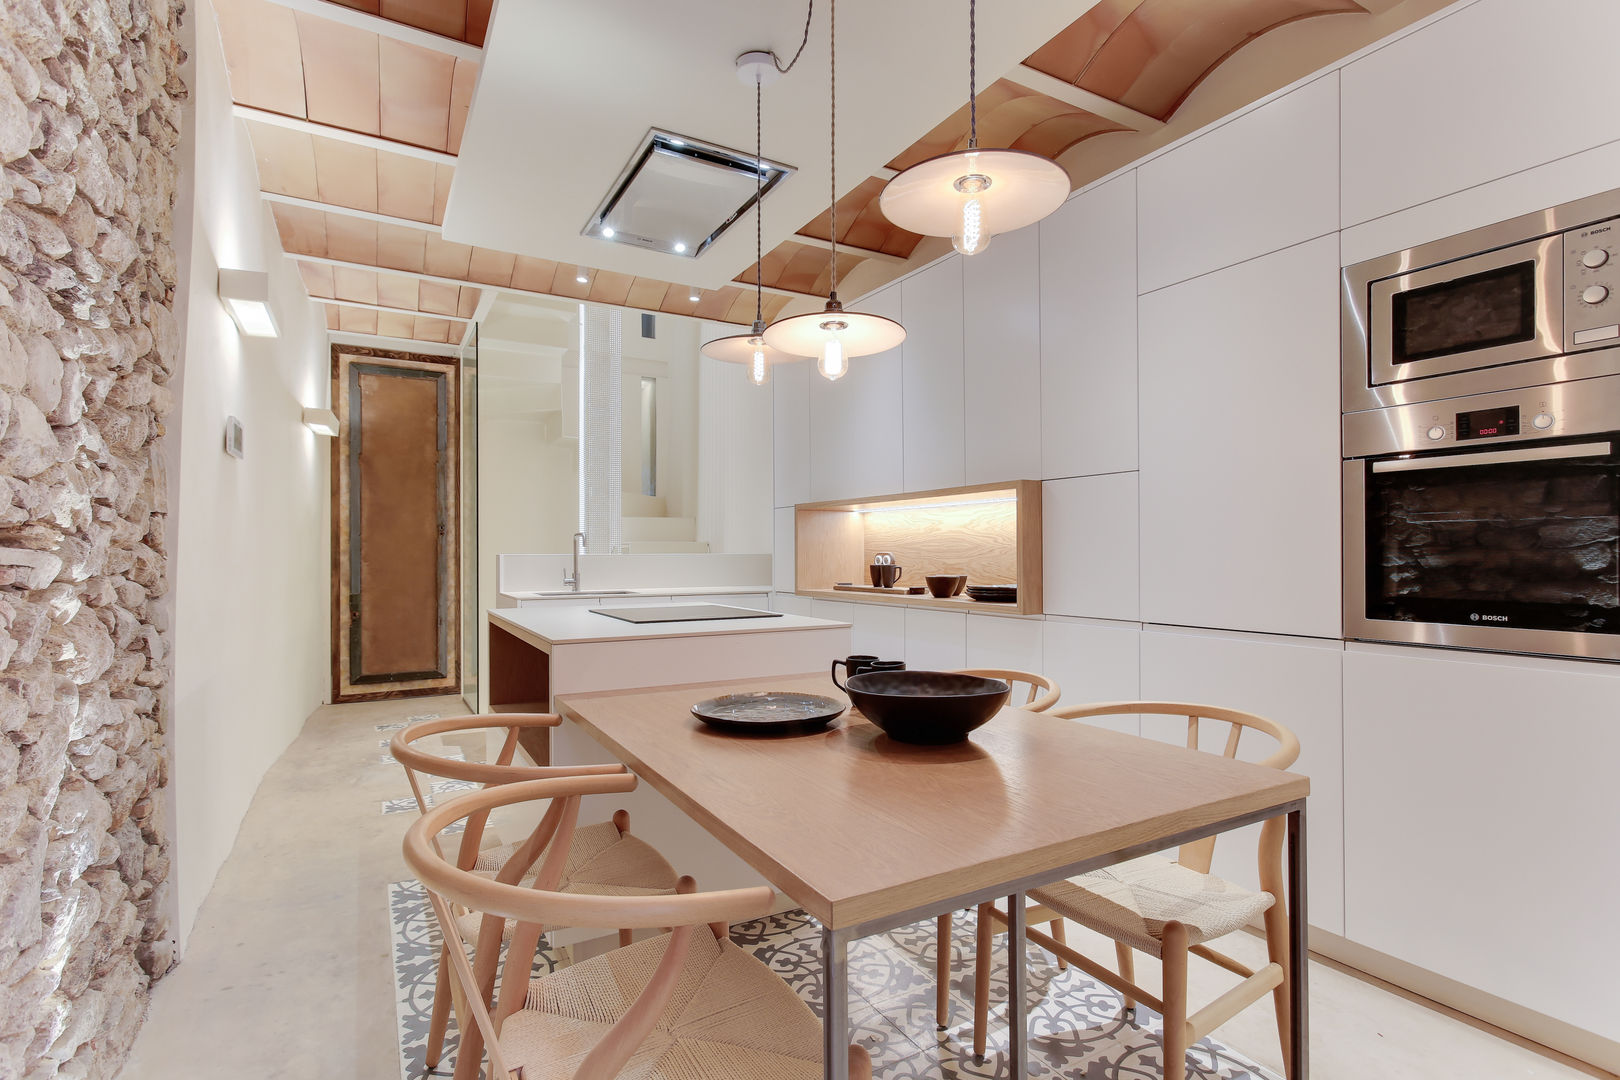 Casa de 3 niveles con rehabilitación integral para sus 140m2 , Lara Pujol | Interiorismo & Proyectos de diseño Lara Pujol | Interiorismo & Proyectos de diseño Kitchen